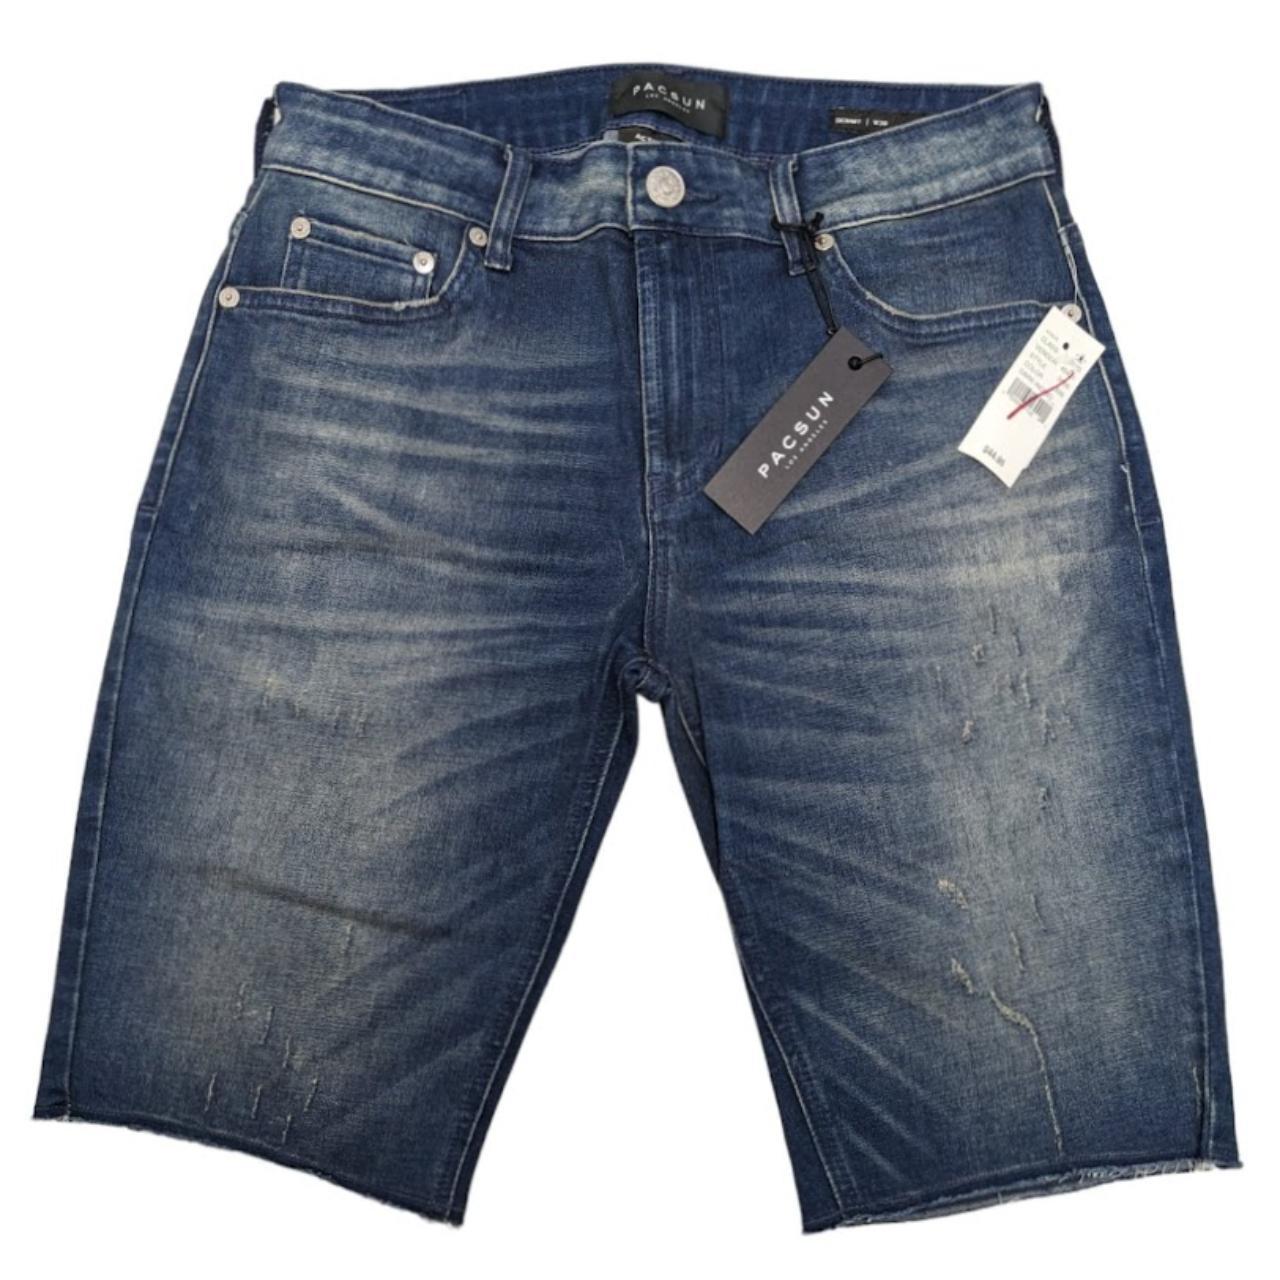 Pacsun Men's Cut Off Denim Shorts